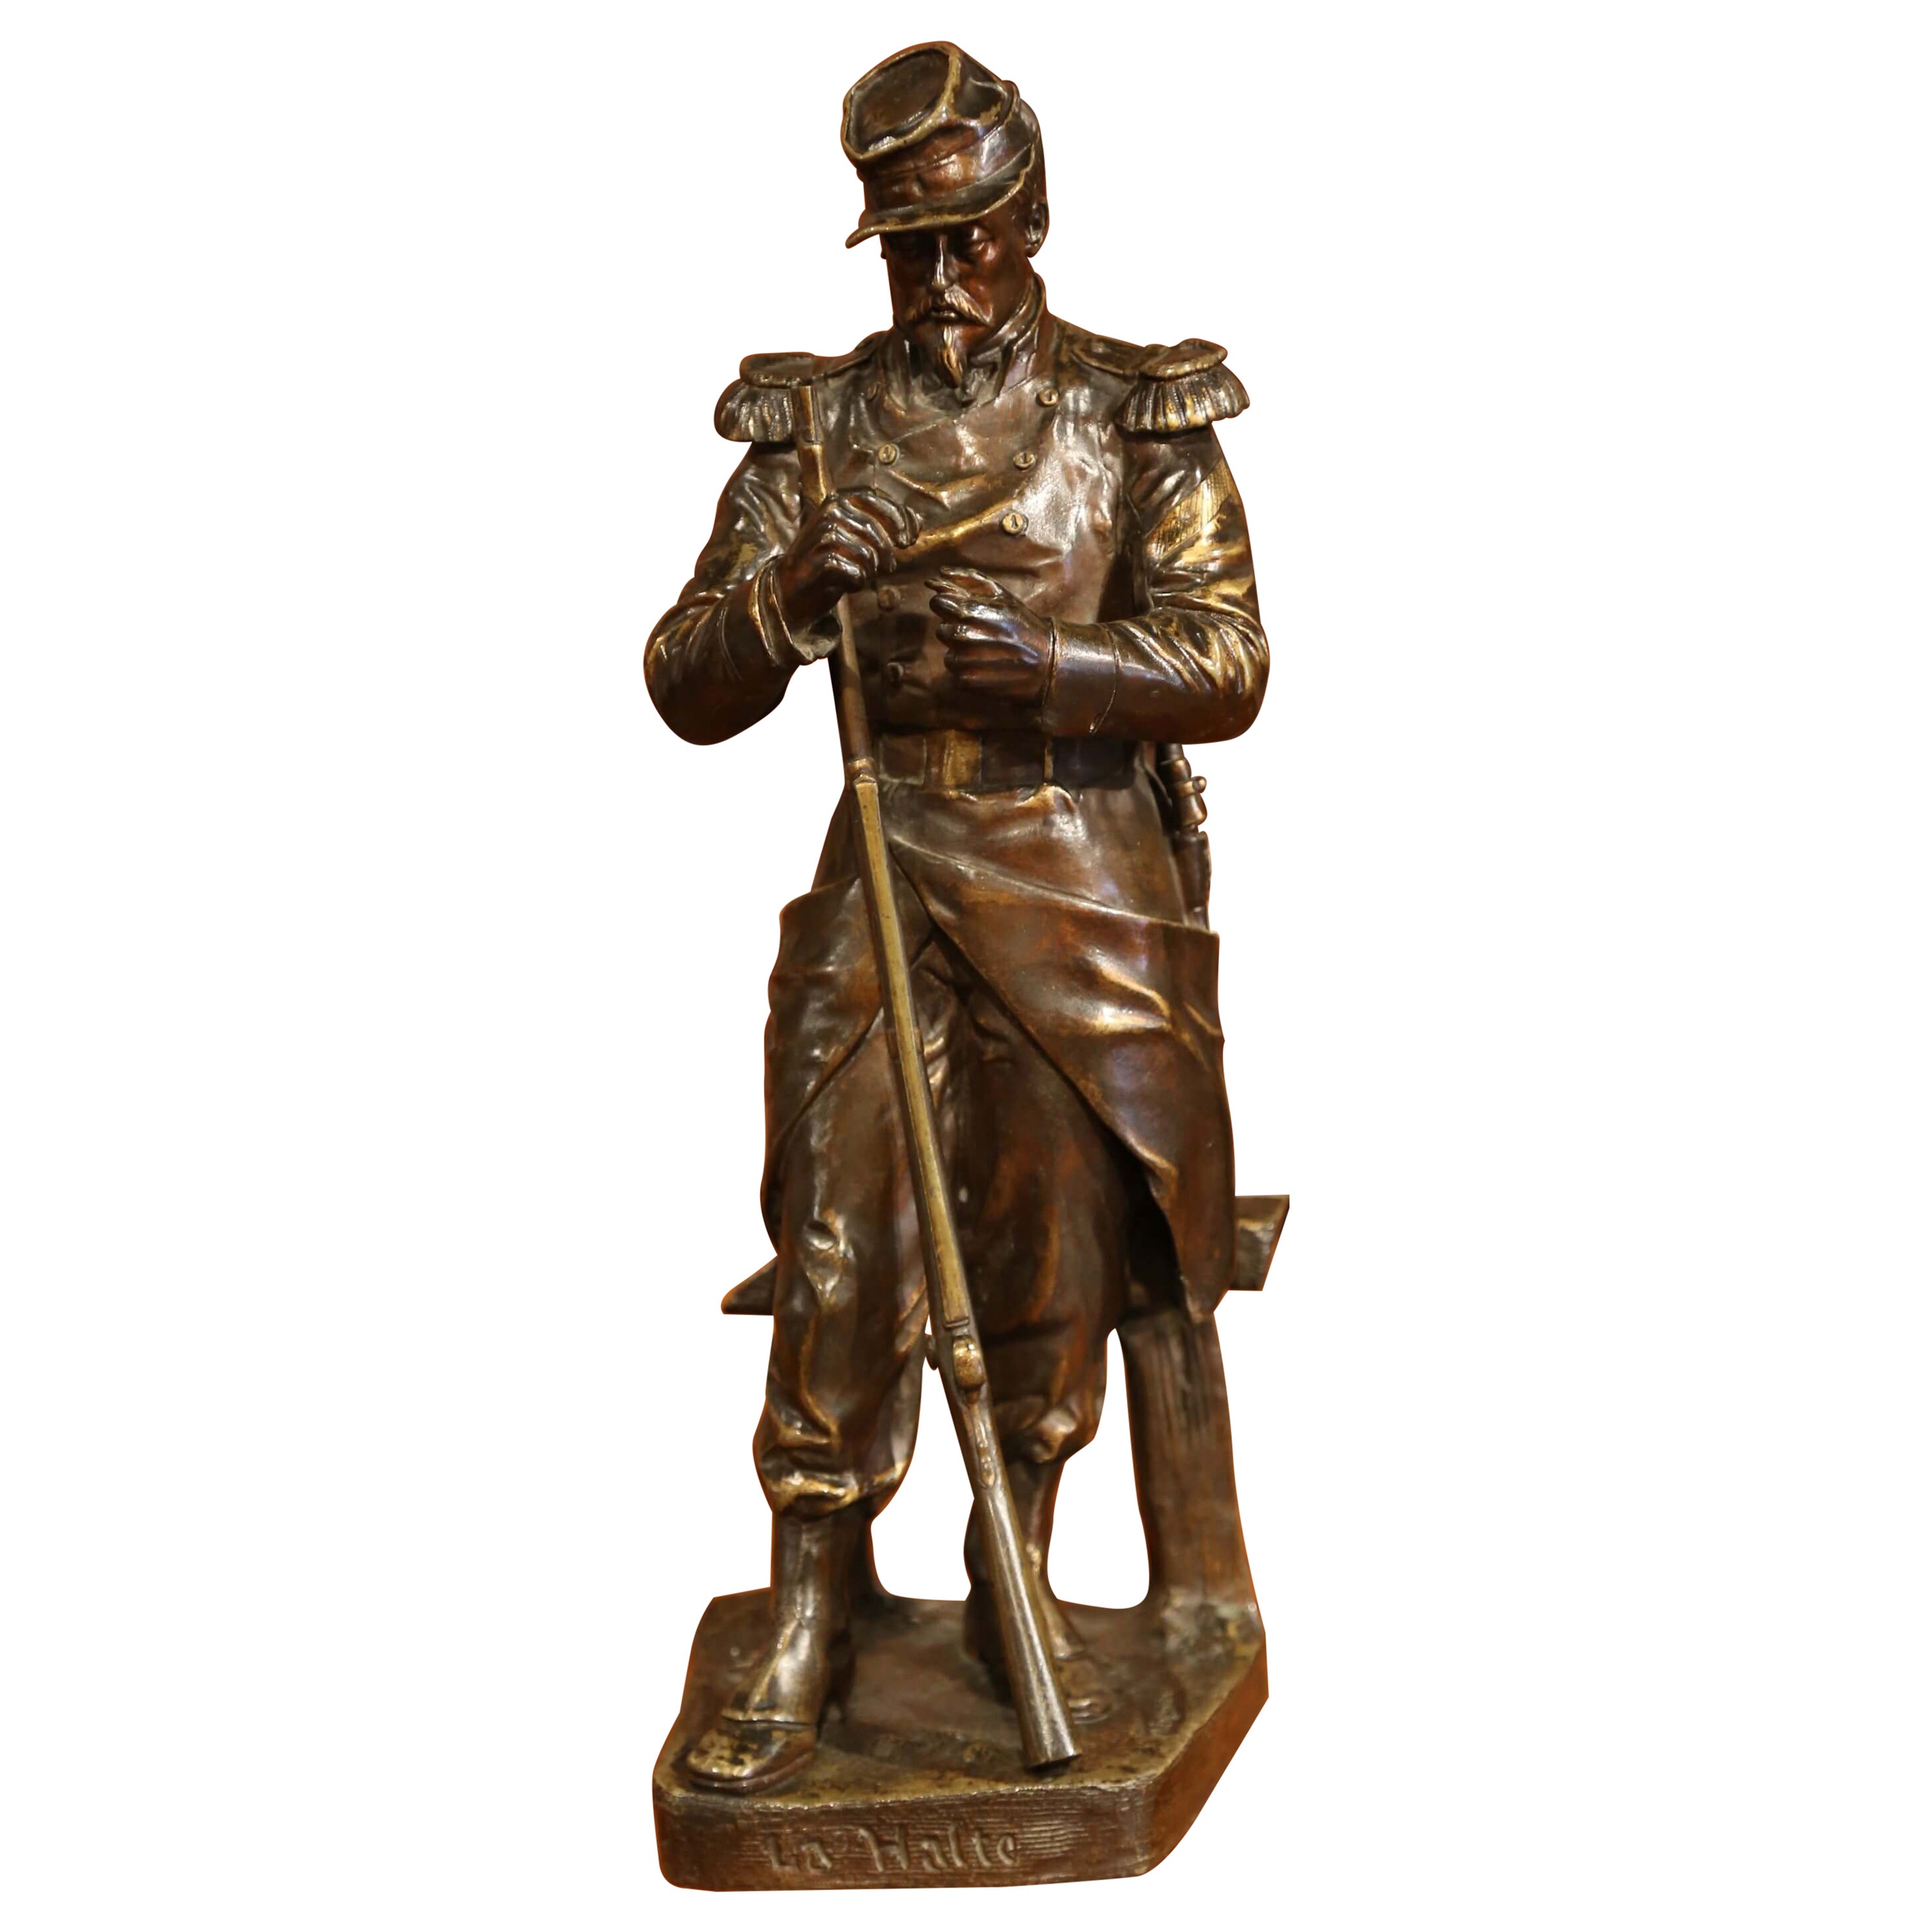 19th Century French Patinated Bronze Sculpture “La Halte” Signed L. Mennessier For Sale